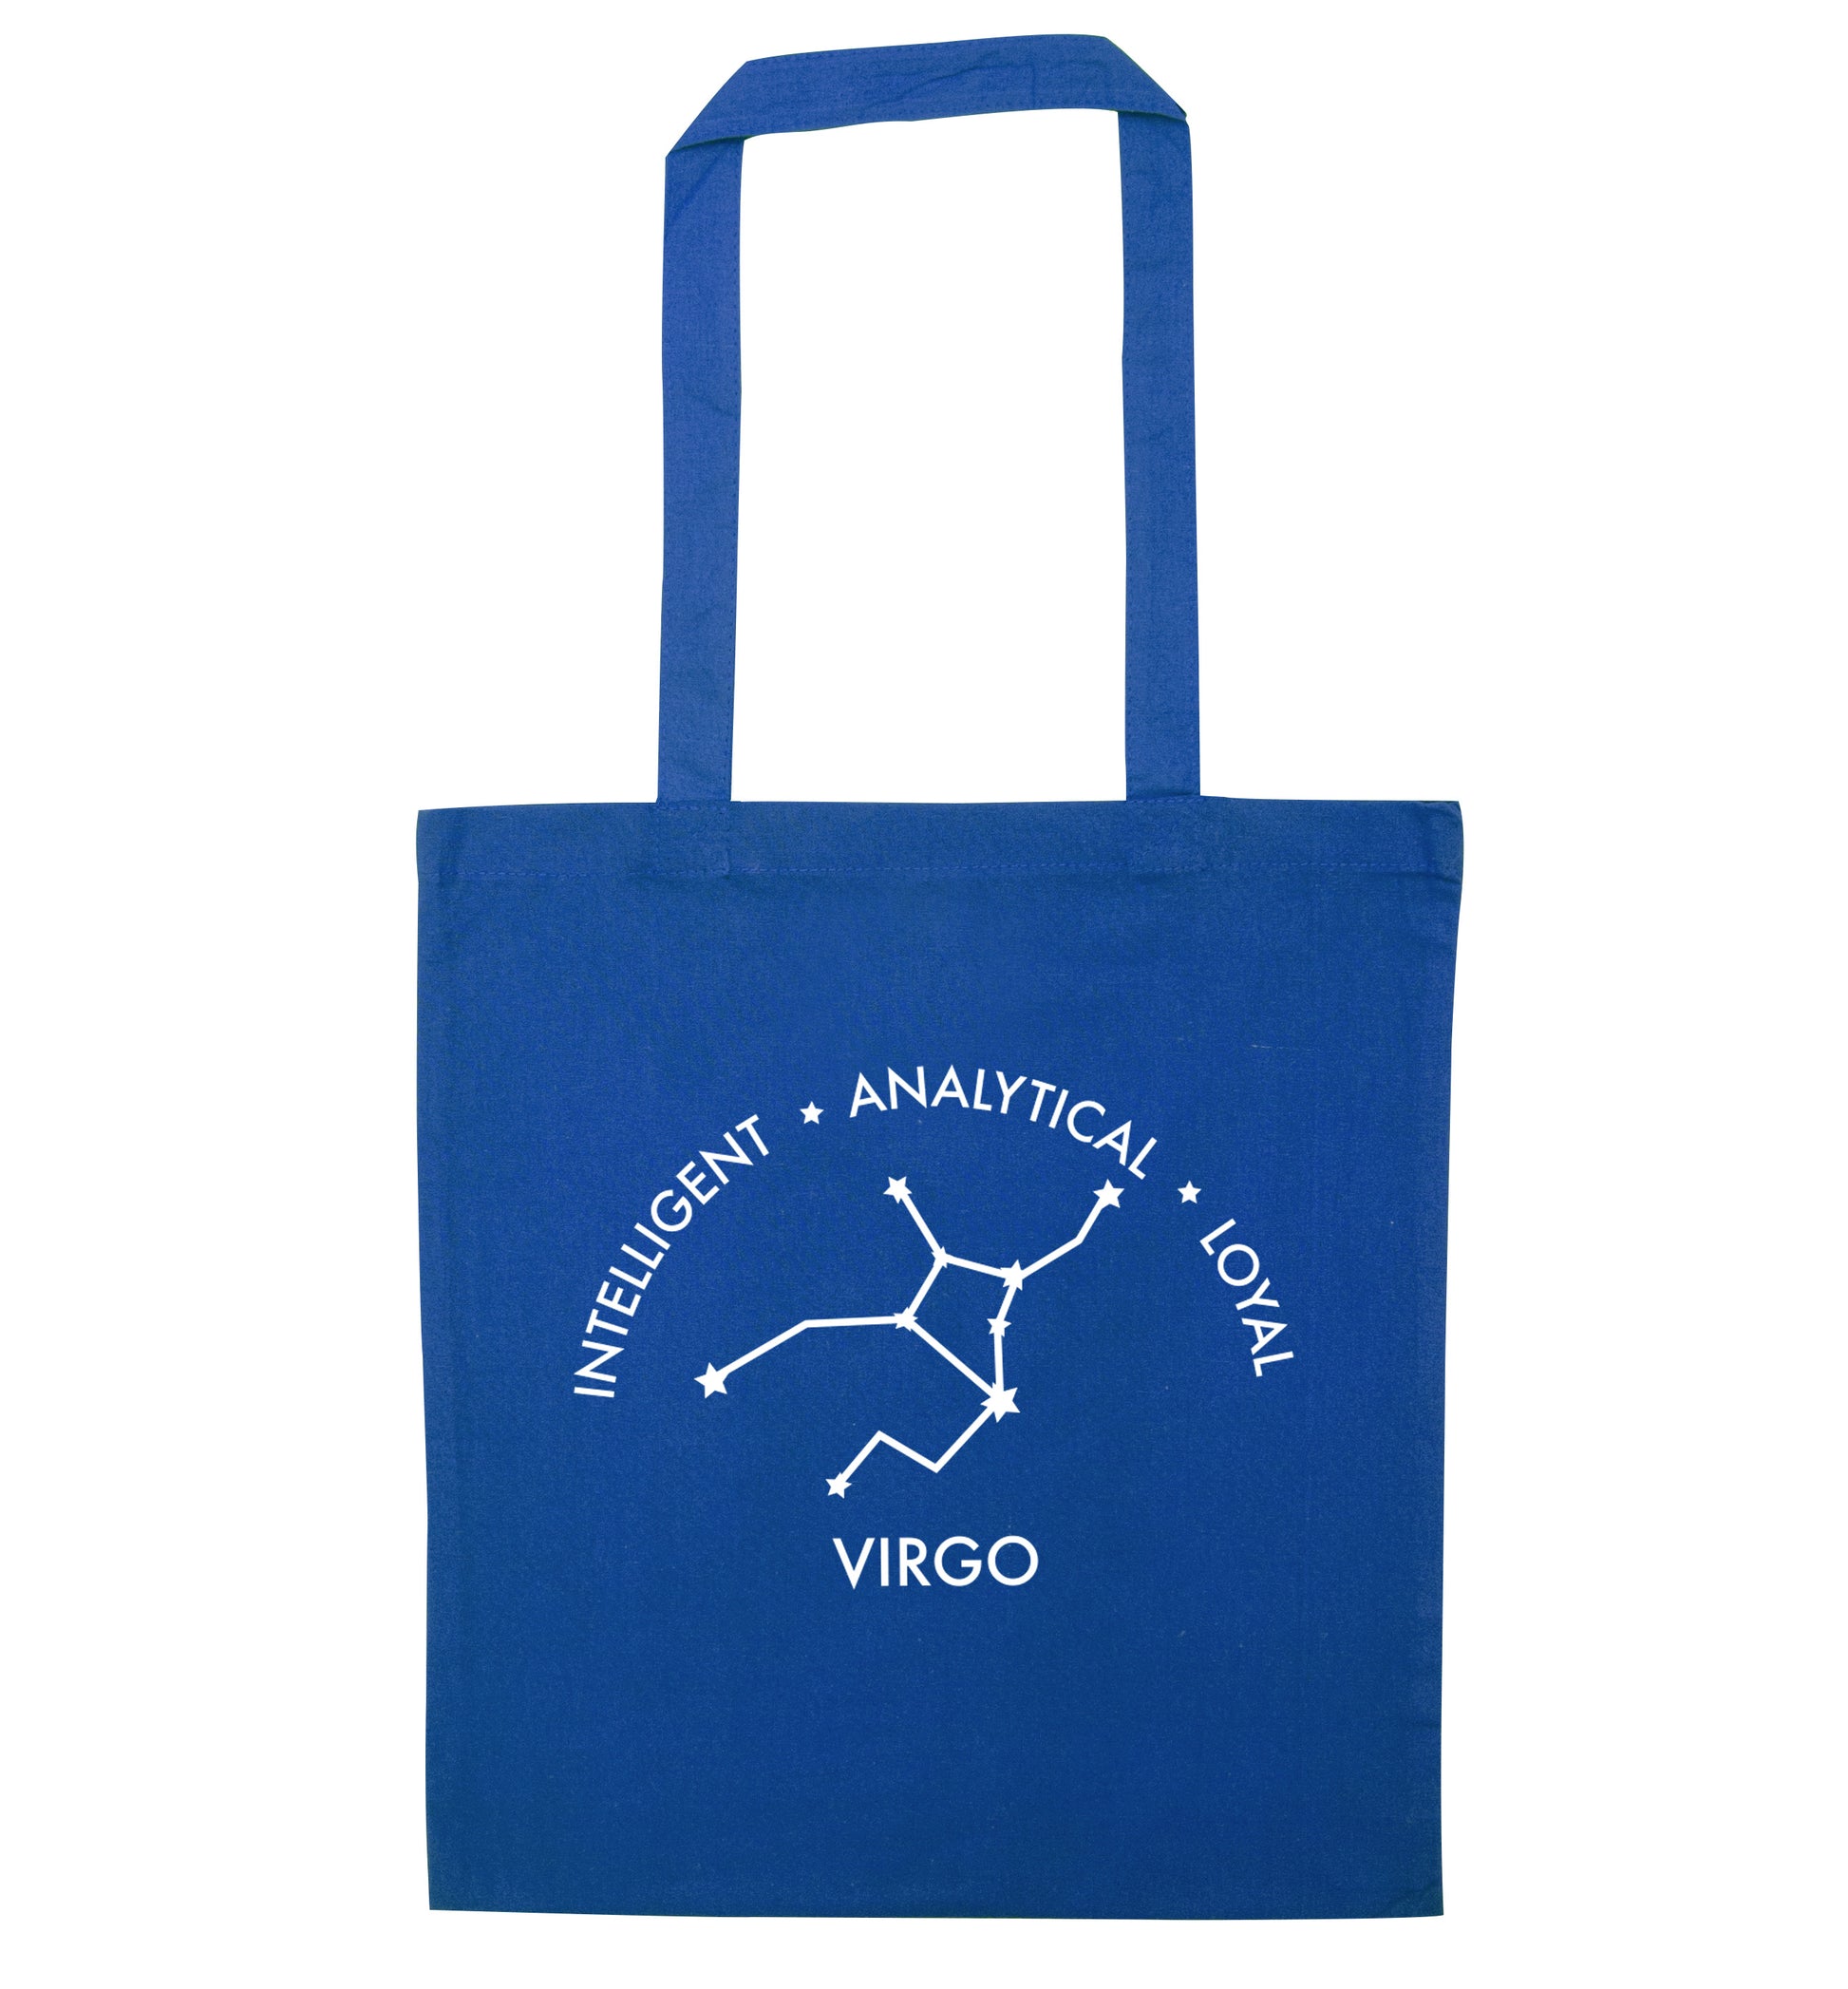 Virgo: Intelligent, Analytical, Loyal blue tote bag